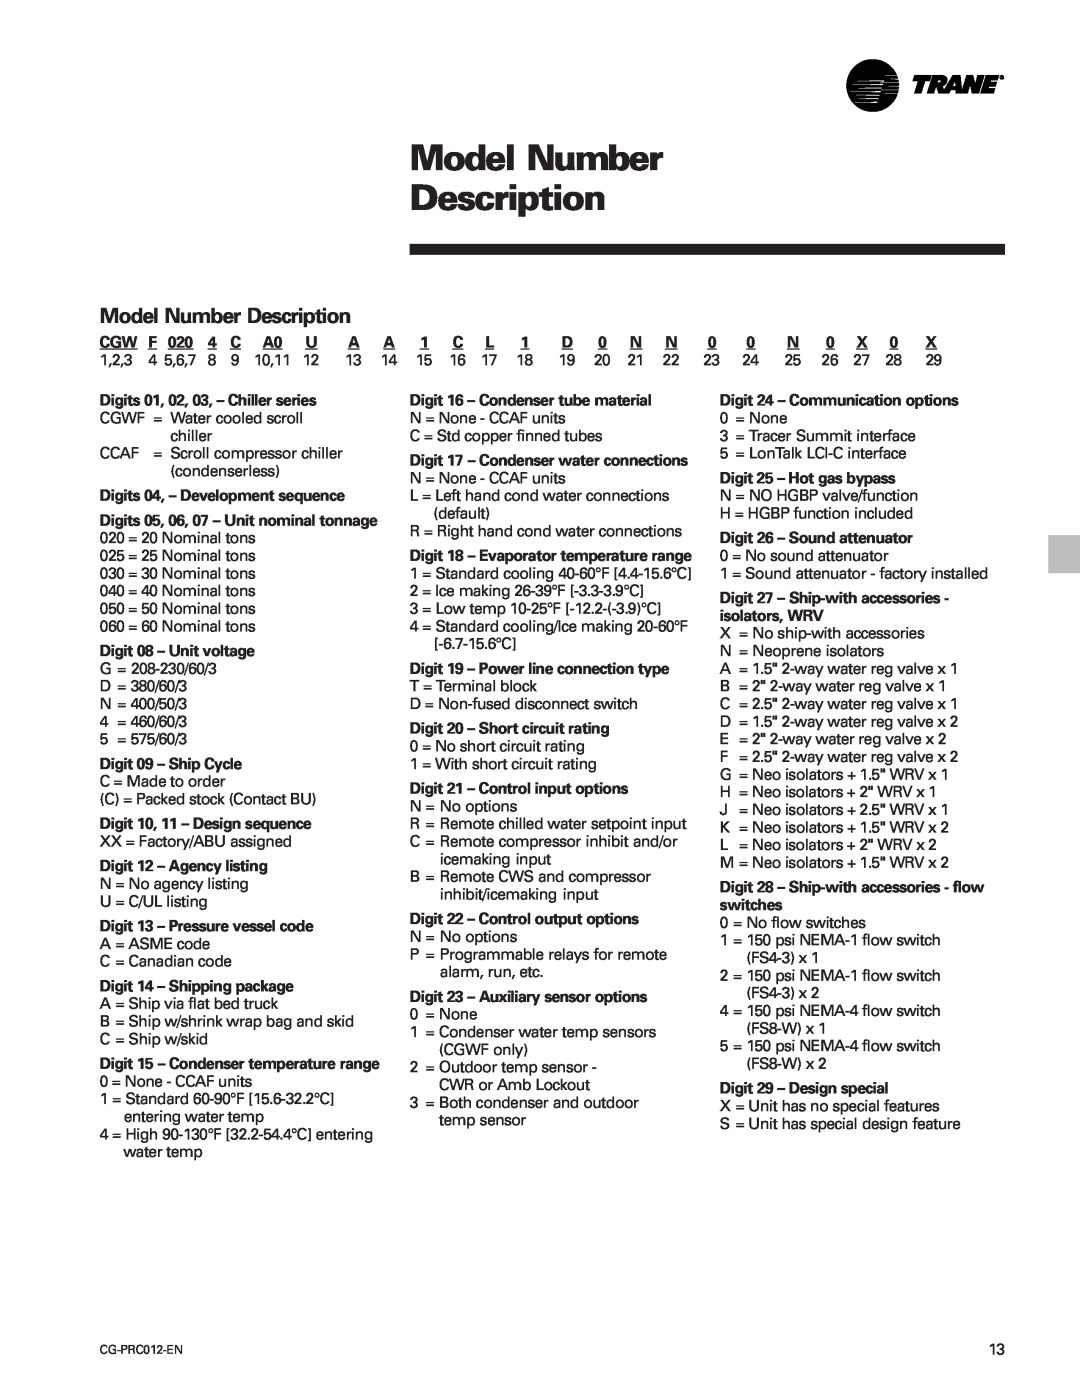 Trane CCAF, CGWF manual Model Number Description, Cgw F, Digits 04, - Development sequence, Digit 08 - Unit voltage 